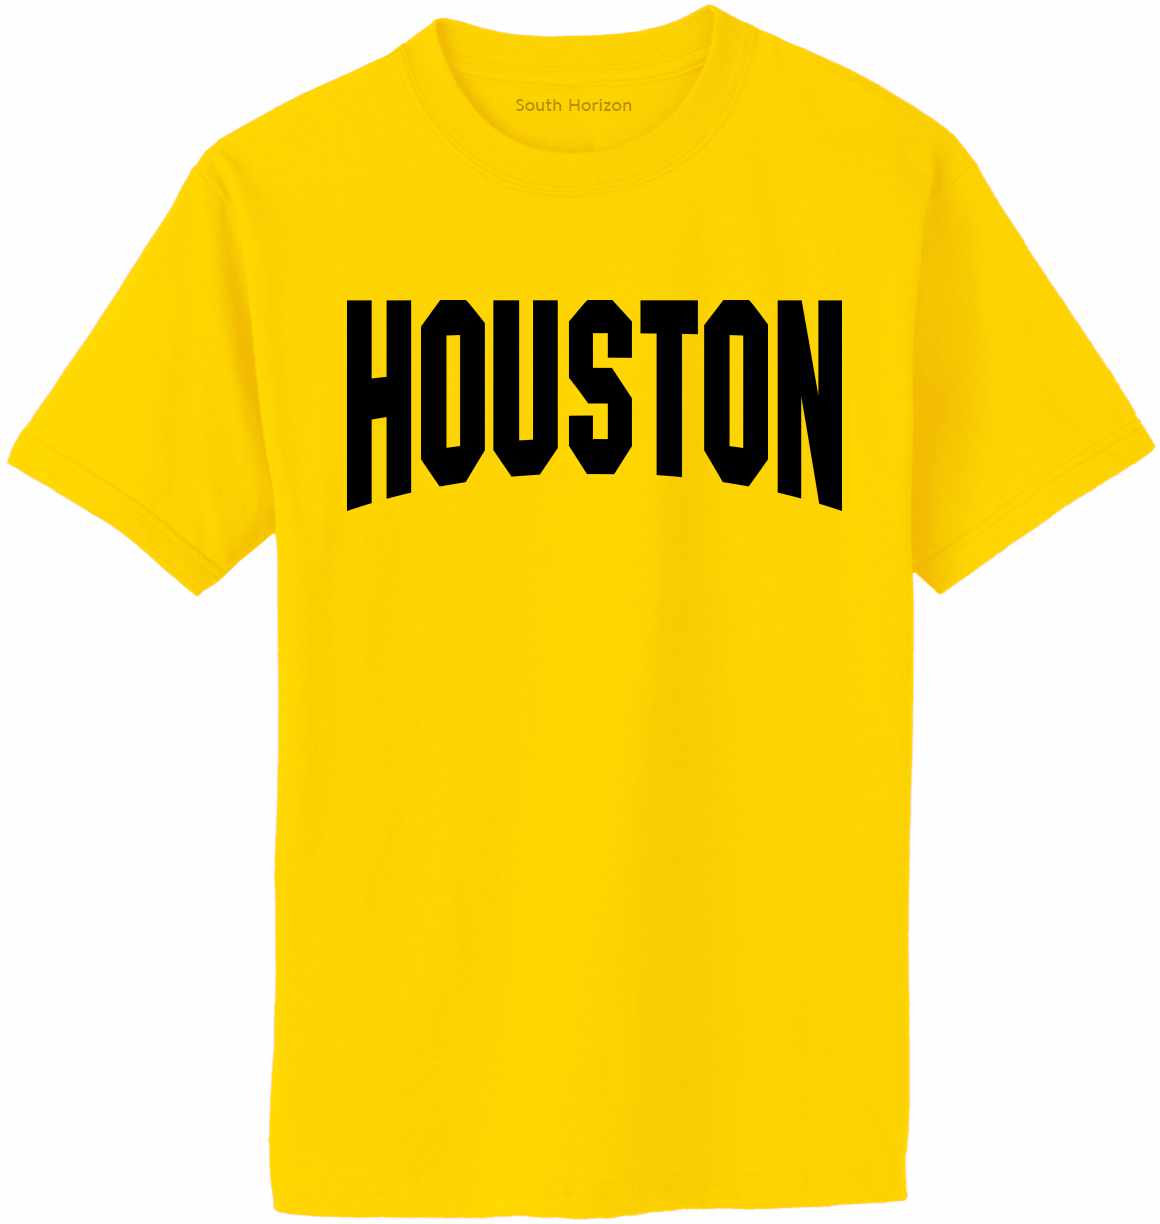 HOUSTON on Adult T-Shirt (#1195-1)